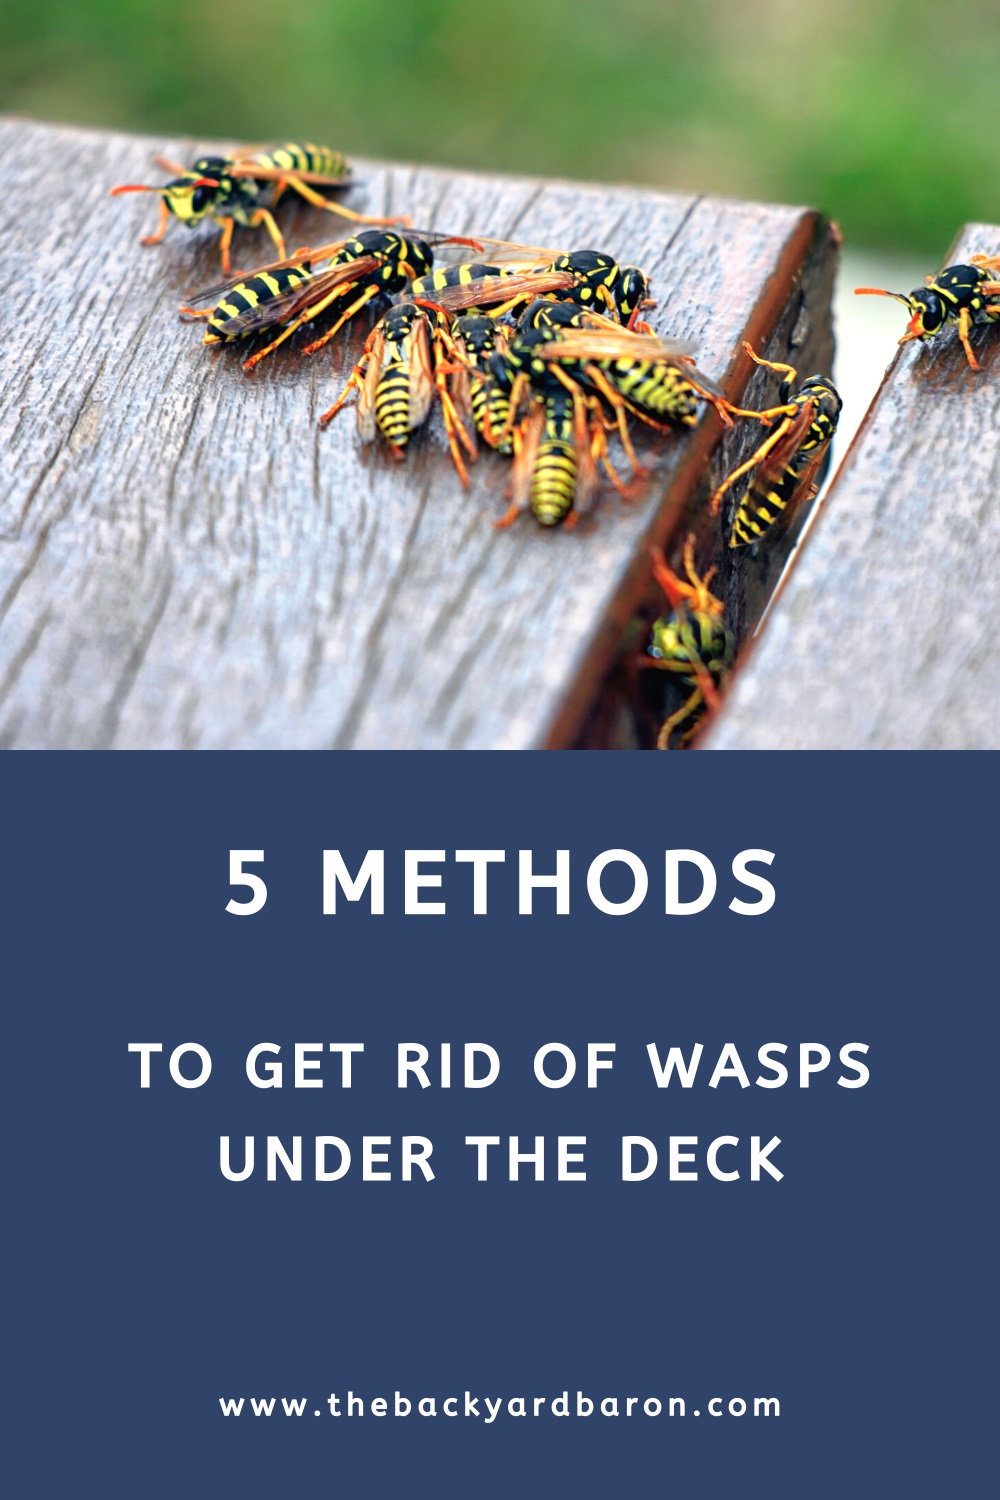 5 Methods to get rid of wasps under deck